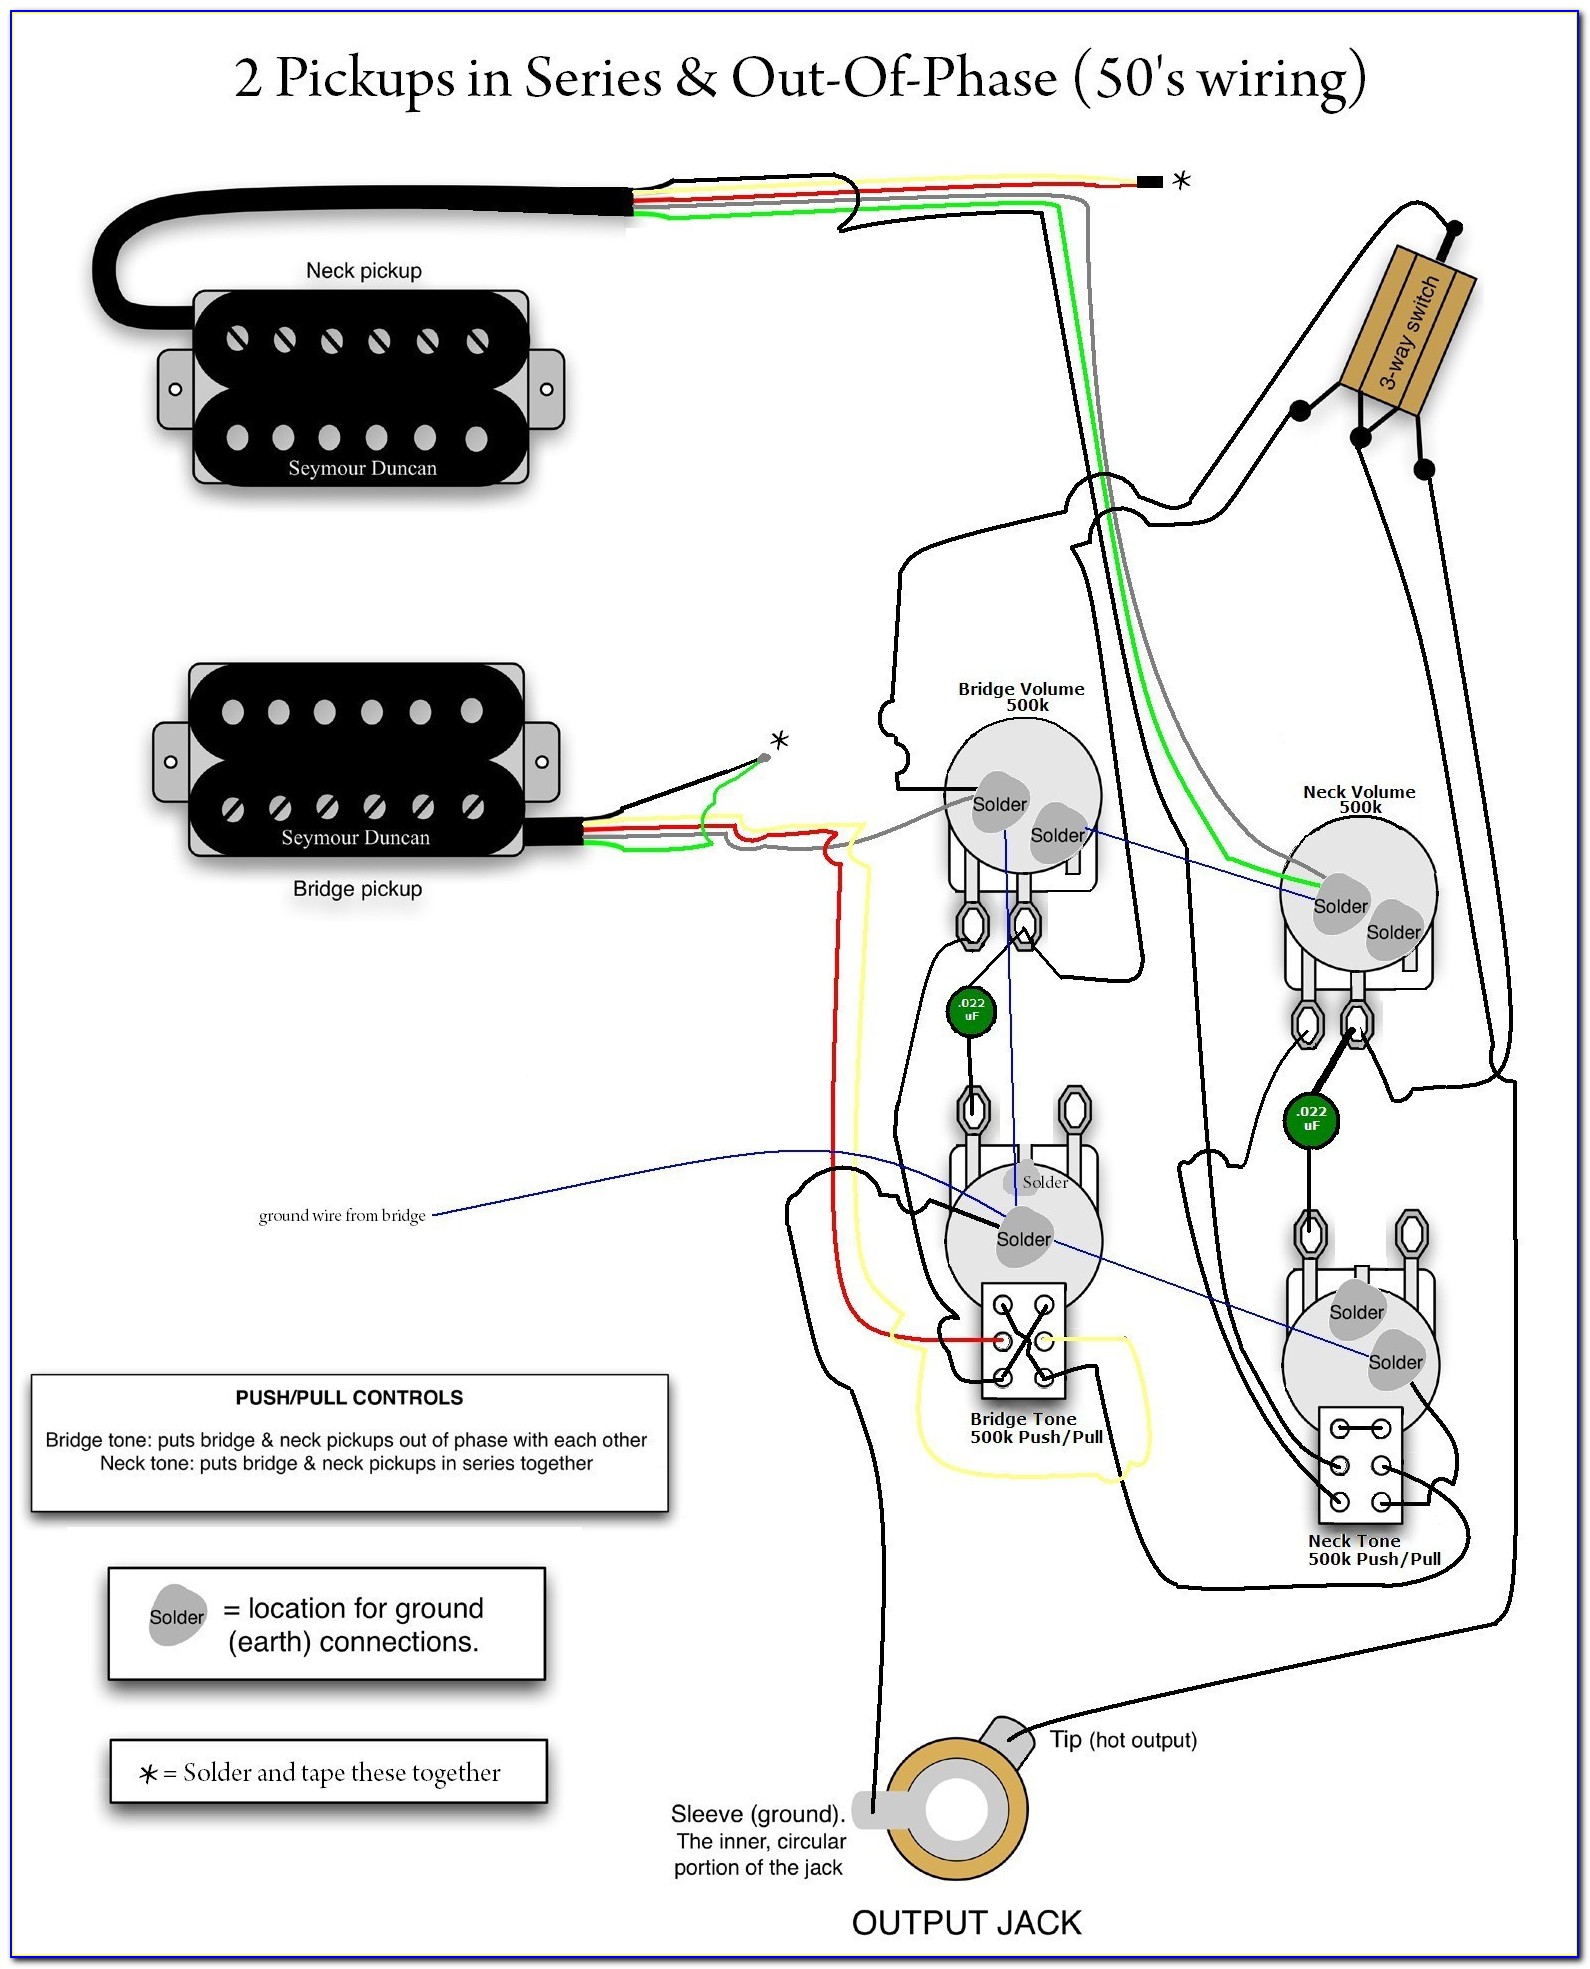 Gibson Sg Wiring Diagram